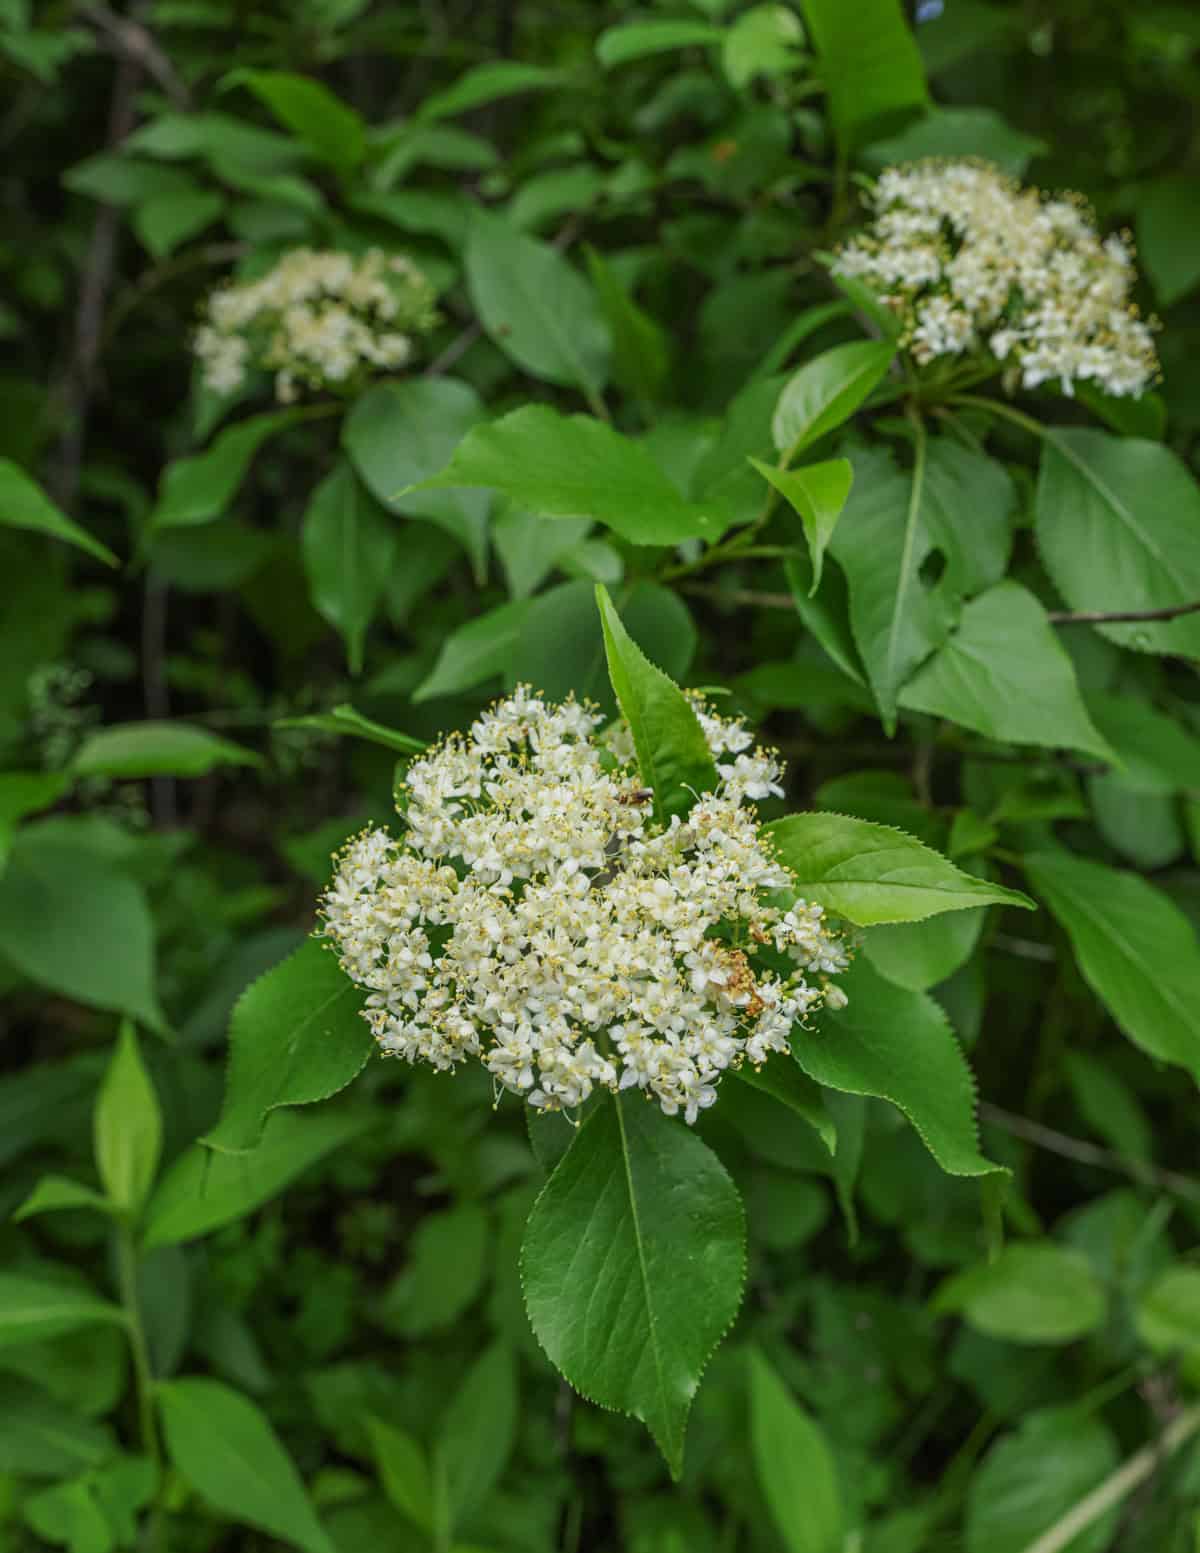 Nannyberry or Viburnum lentago flowers in the spring.